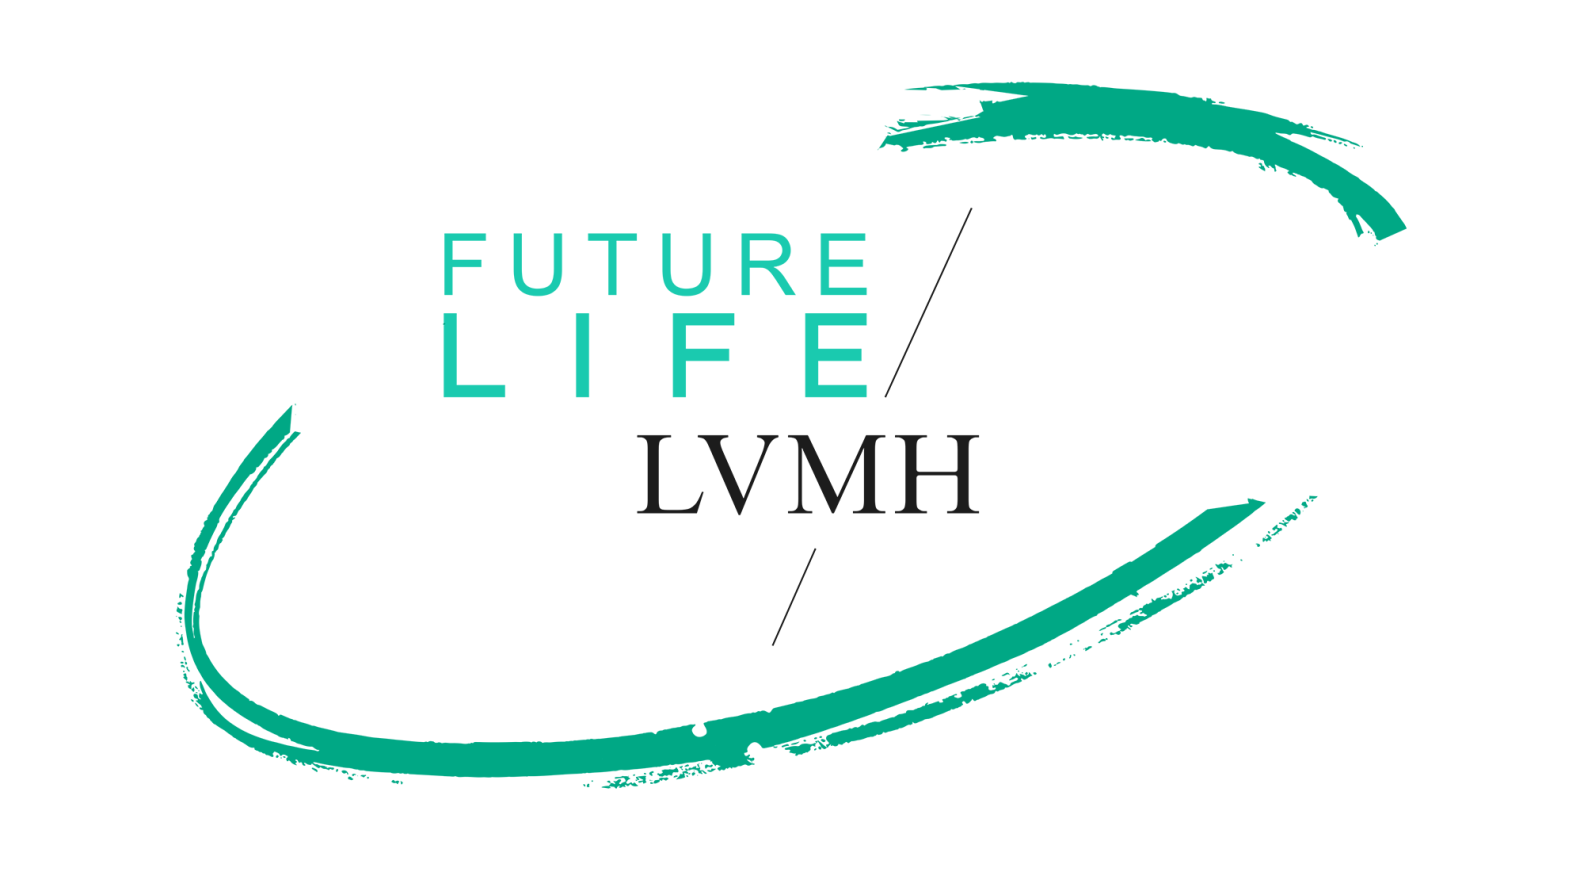 LVMH Environment Department celebrates 25th anniversary - LVMH